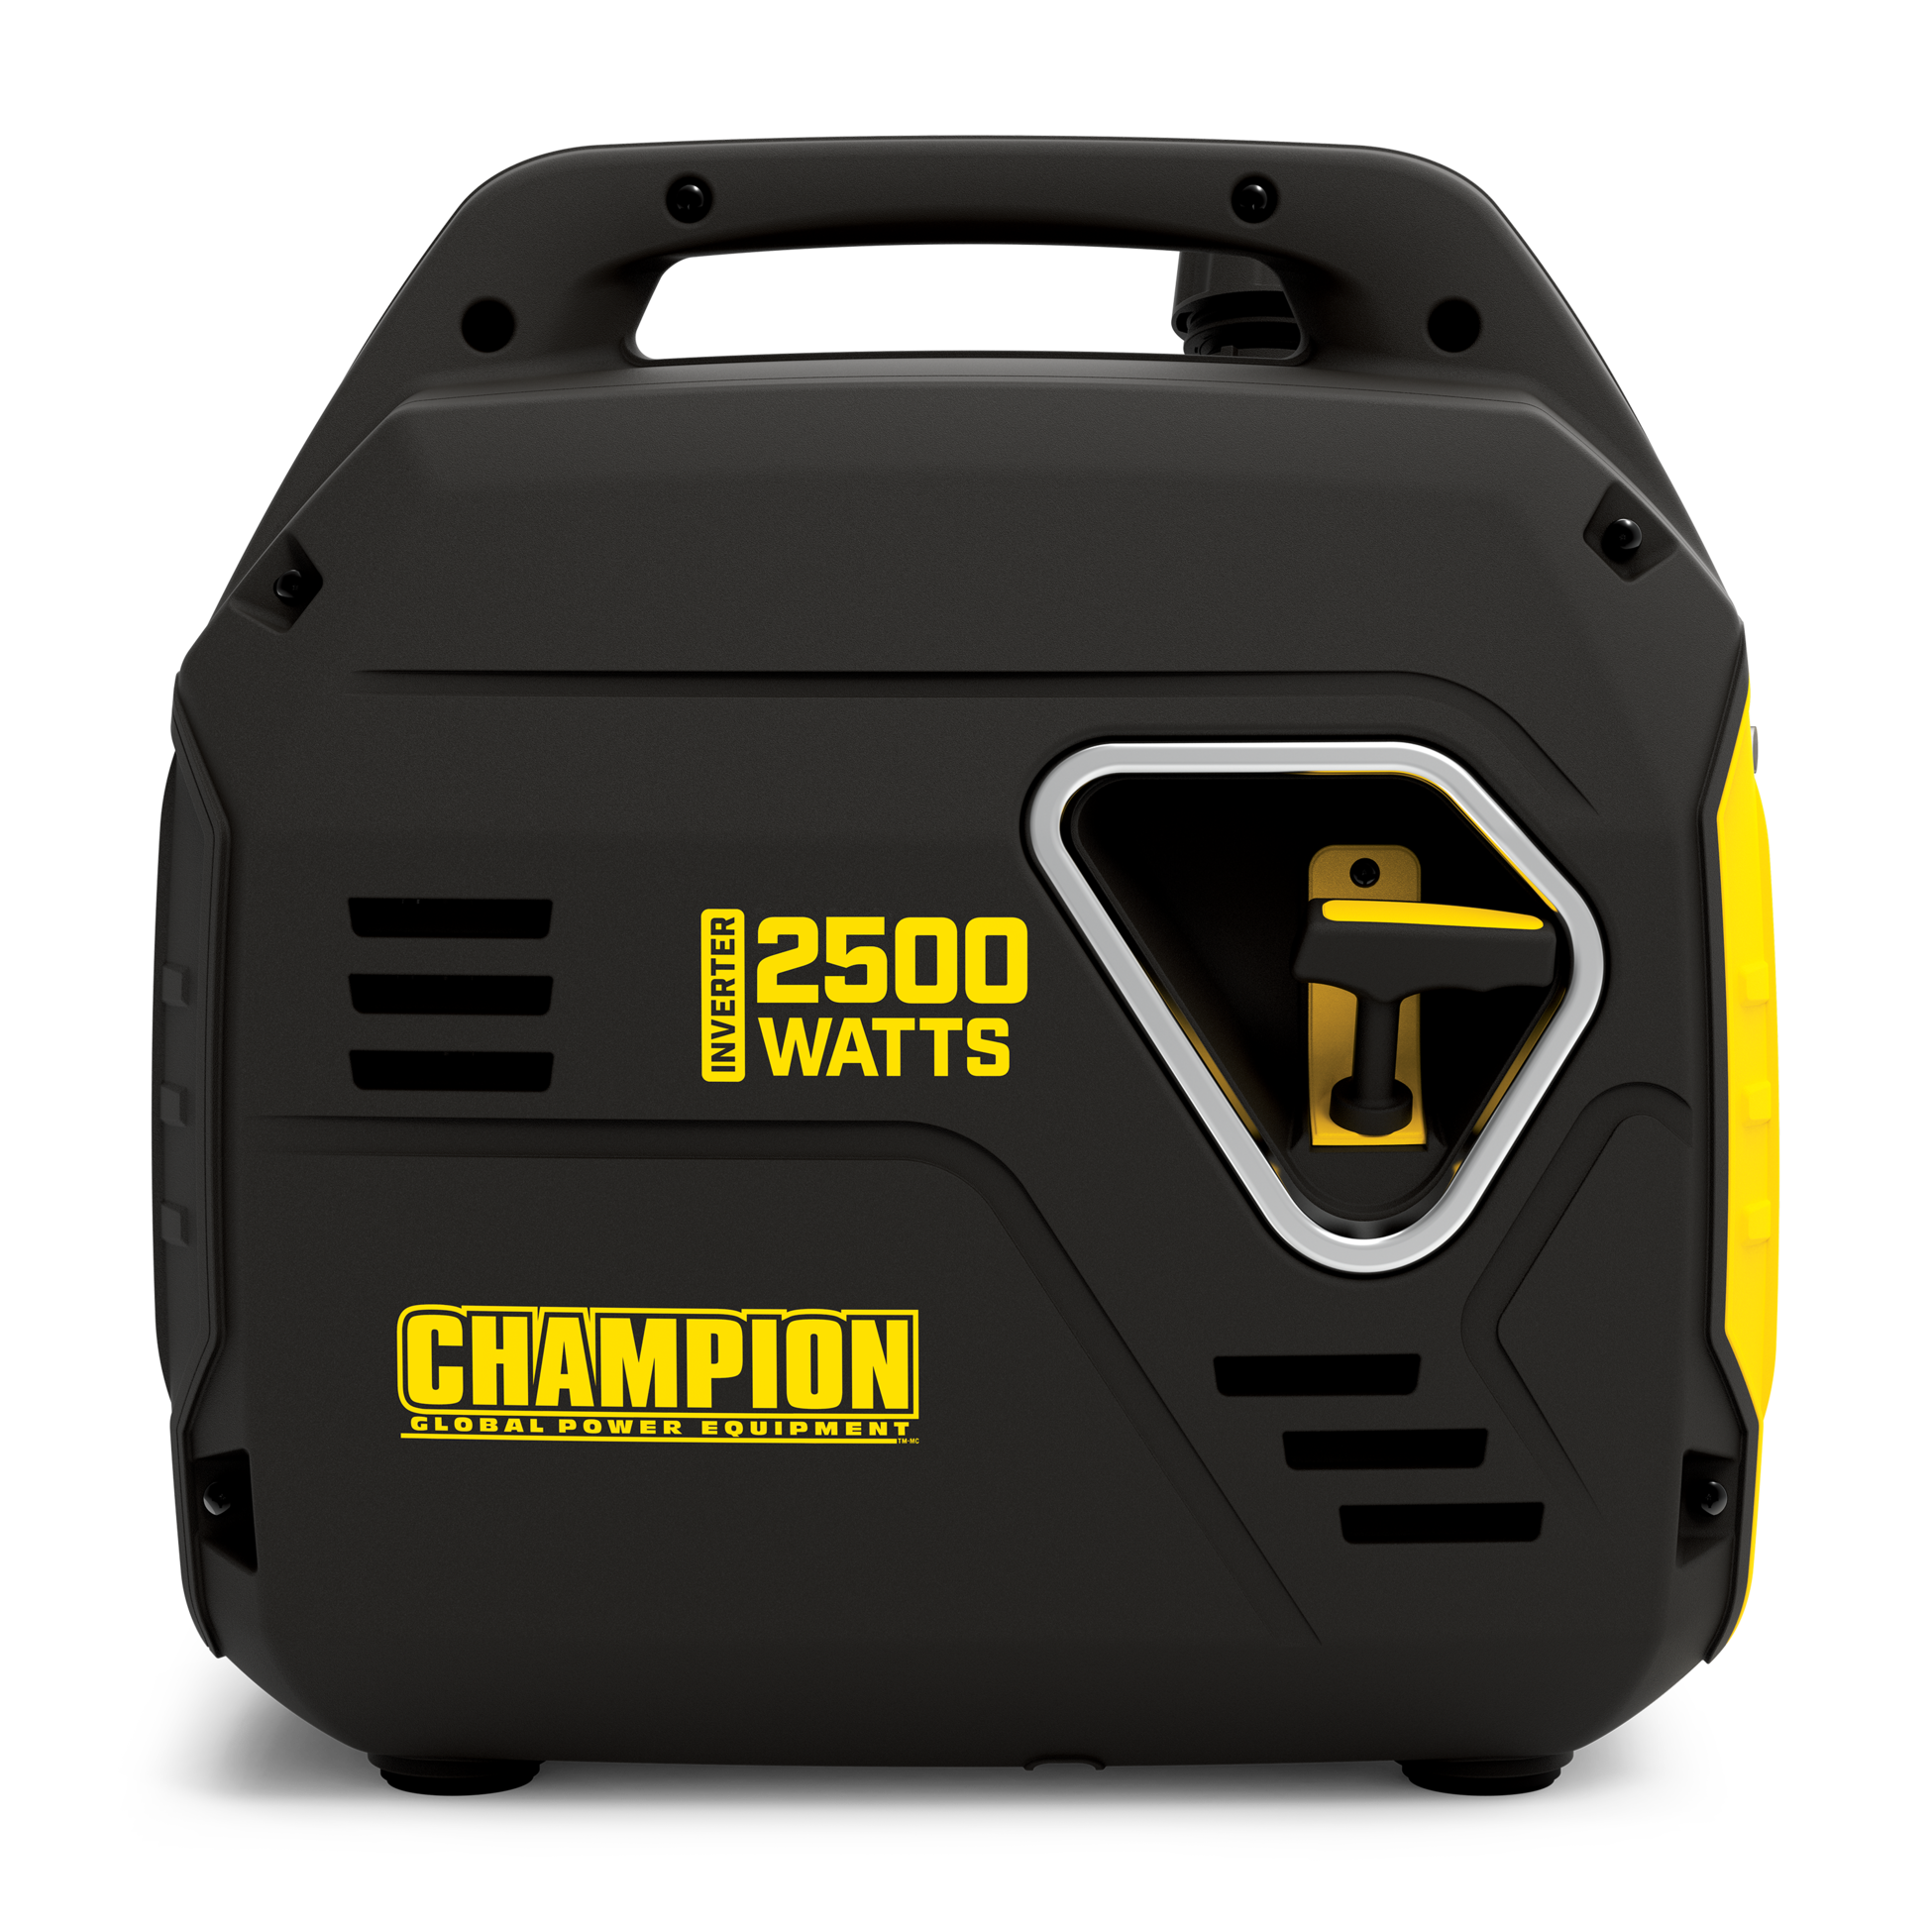 Champion, Champion 200950 1850W/2500W Gas Portable Inverter Generator New